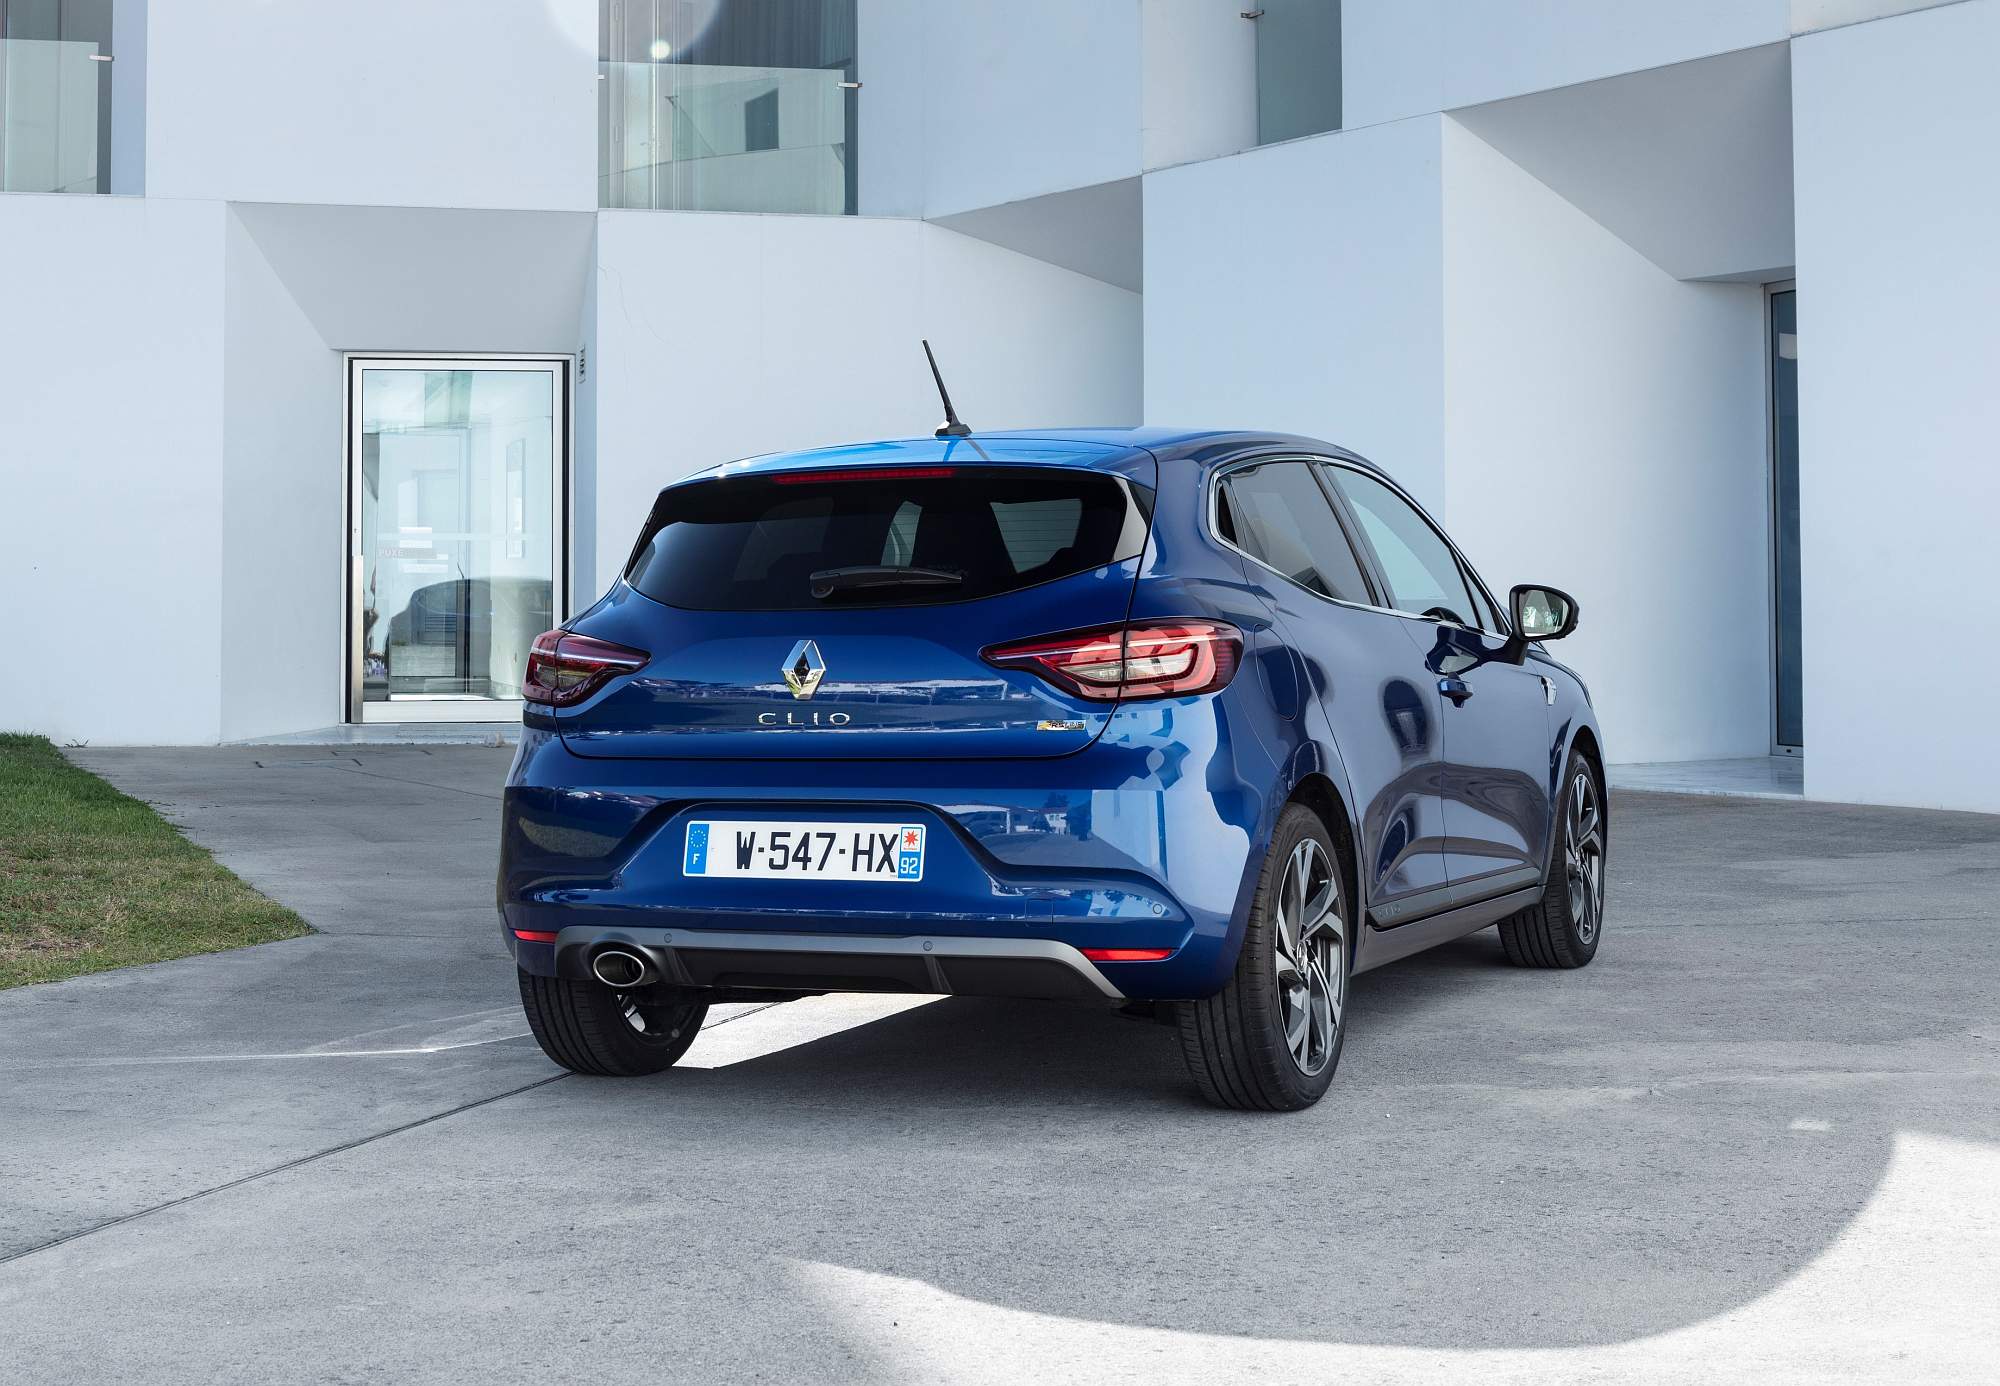 2019 – Essai presse Nouvelle Renault CLIO au Portugal